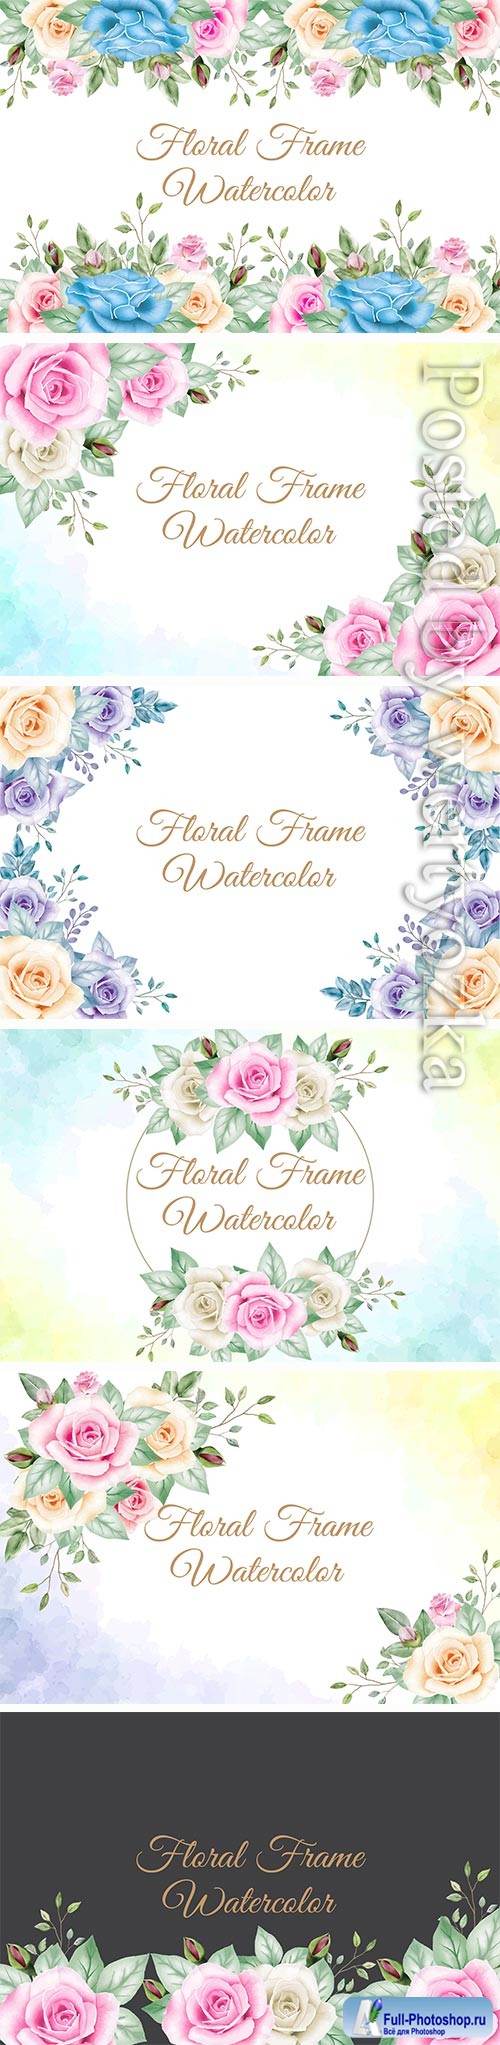 Floral frame watercolor vector design